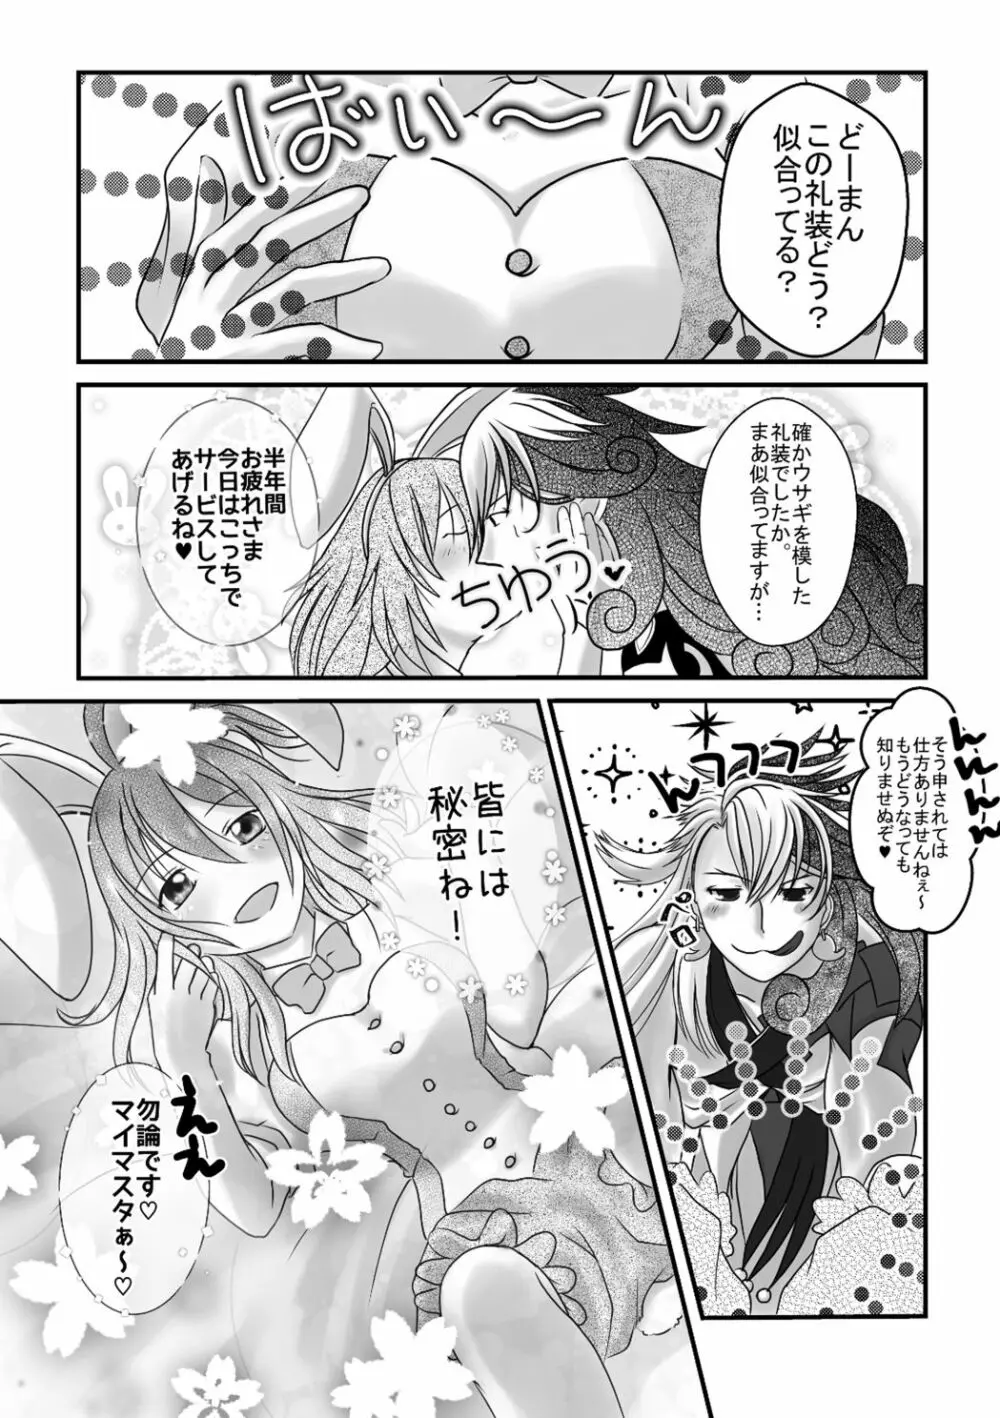 ] Rin guda ♀ rakugaki guda yuru manga(Fate/Grand Order] 2ページ